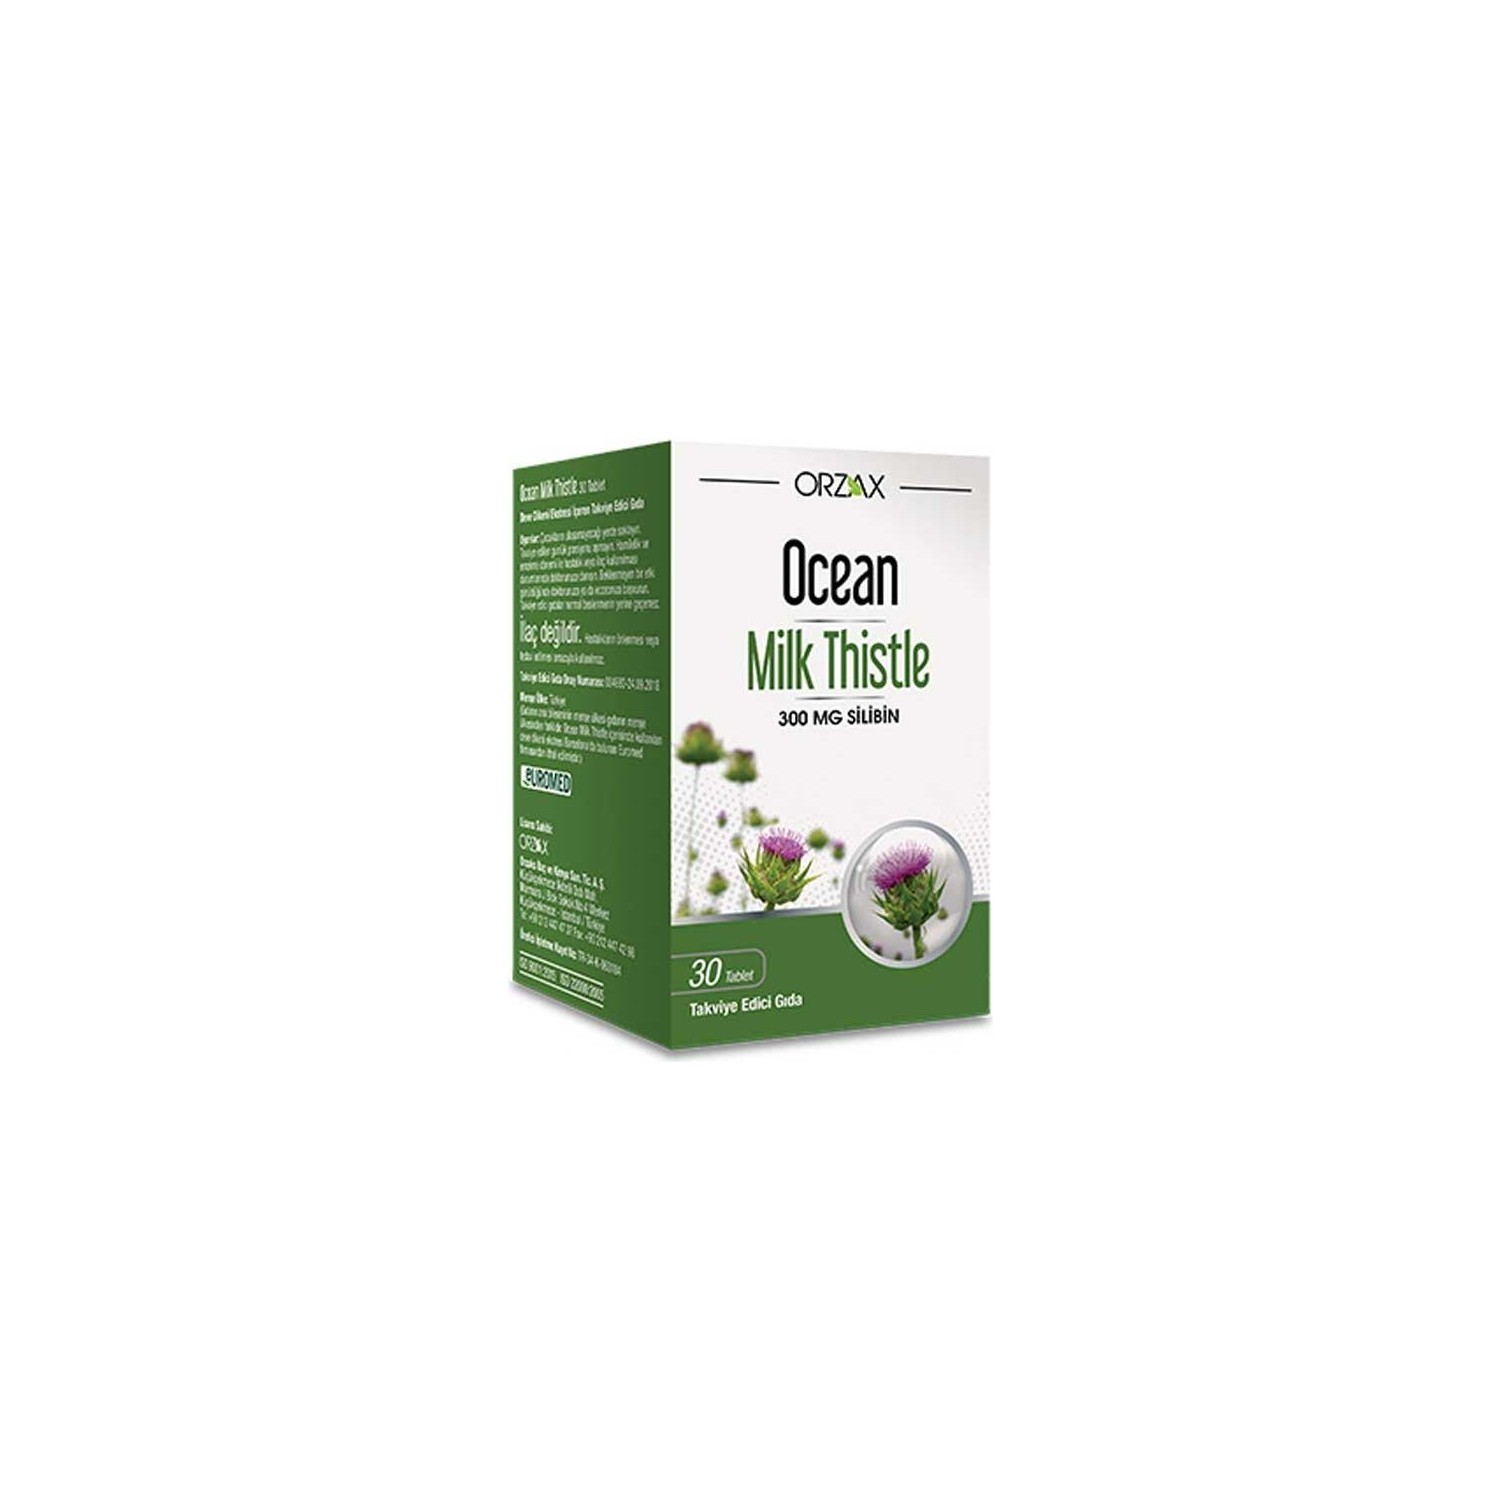 Пищевая добавка Orzax Ocean Milk Thistle Supplementary Food, 30 таблеток биологически активная добавка биакон milk thistle oil lecitin 30 шт